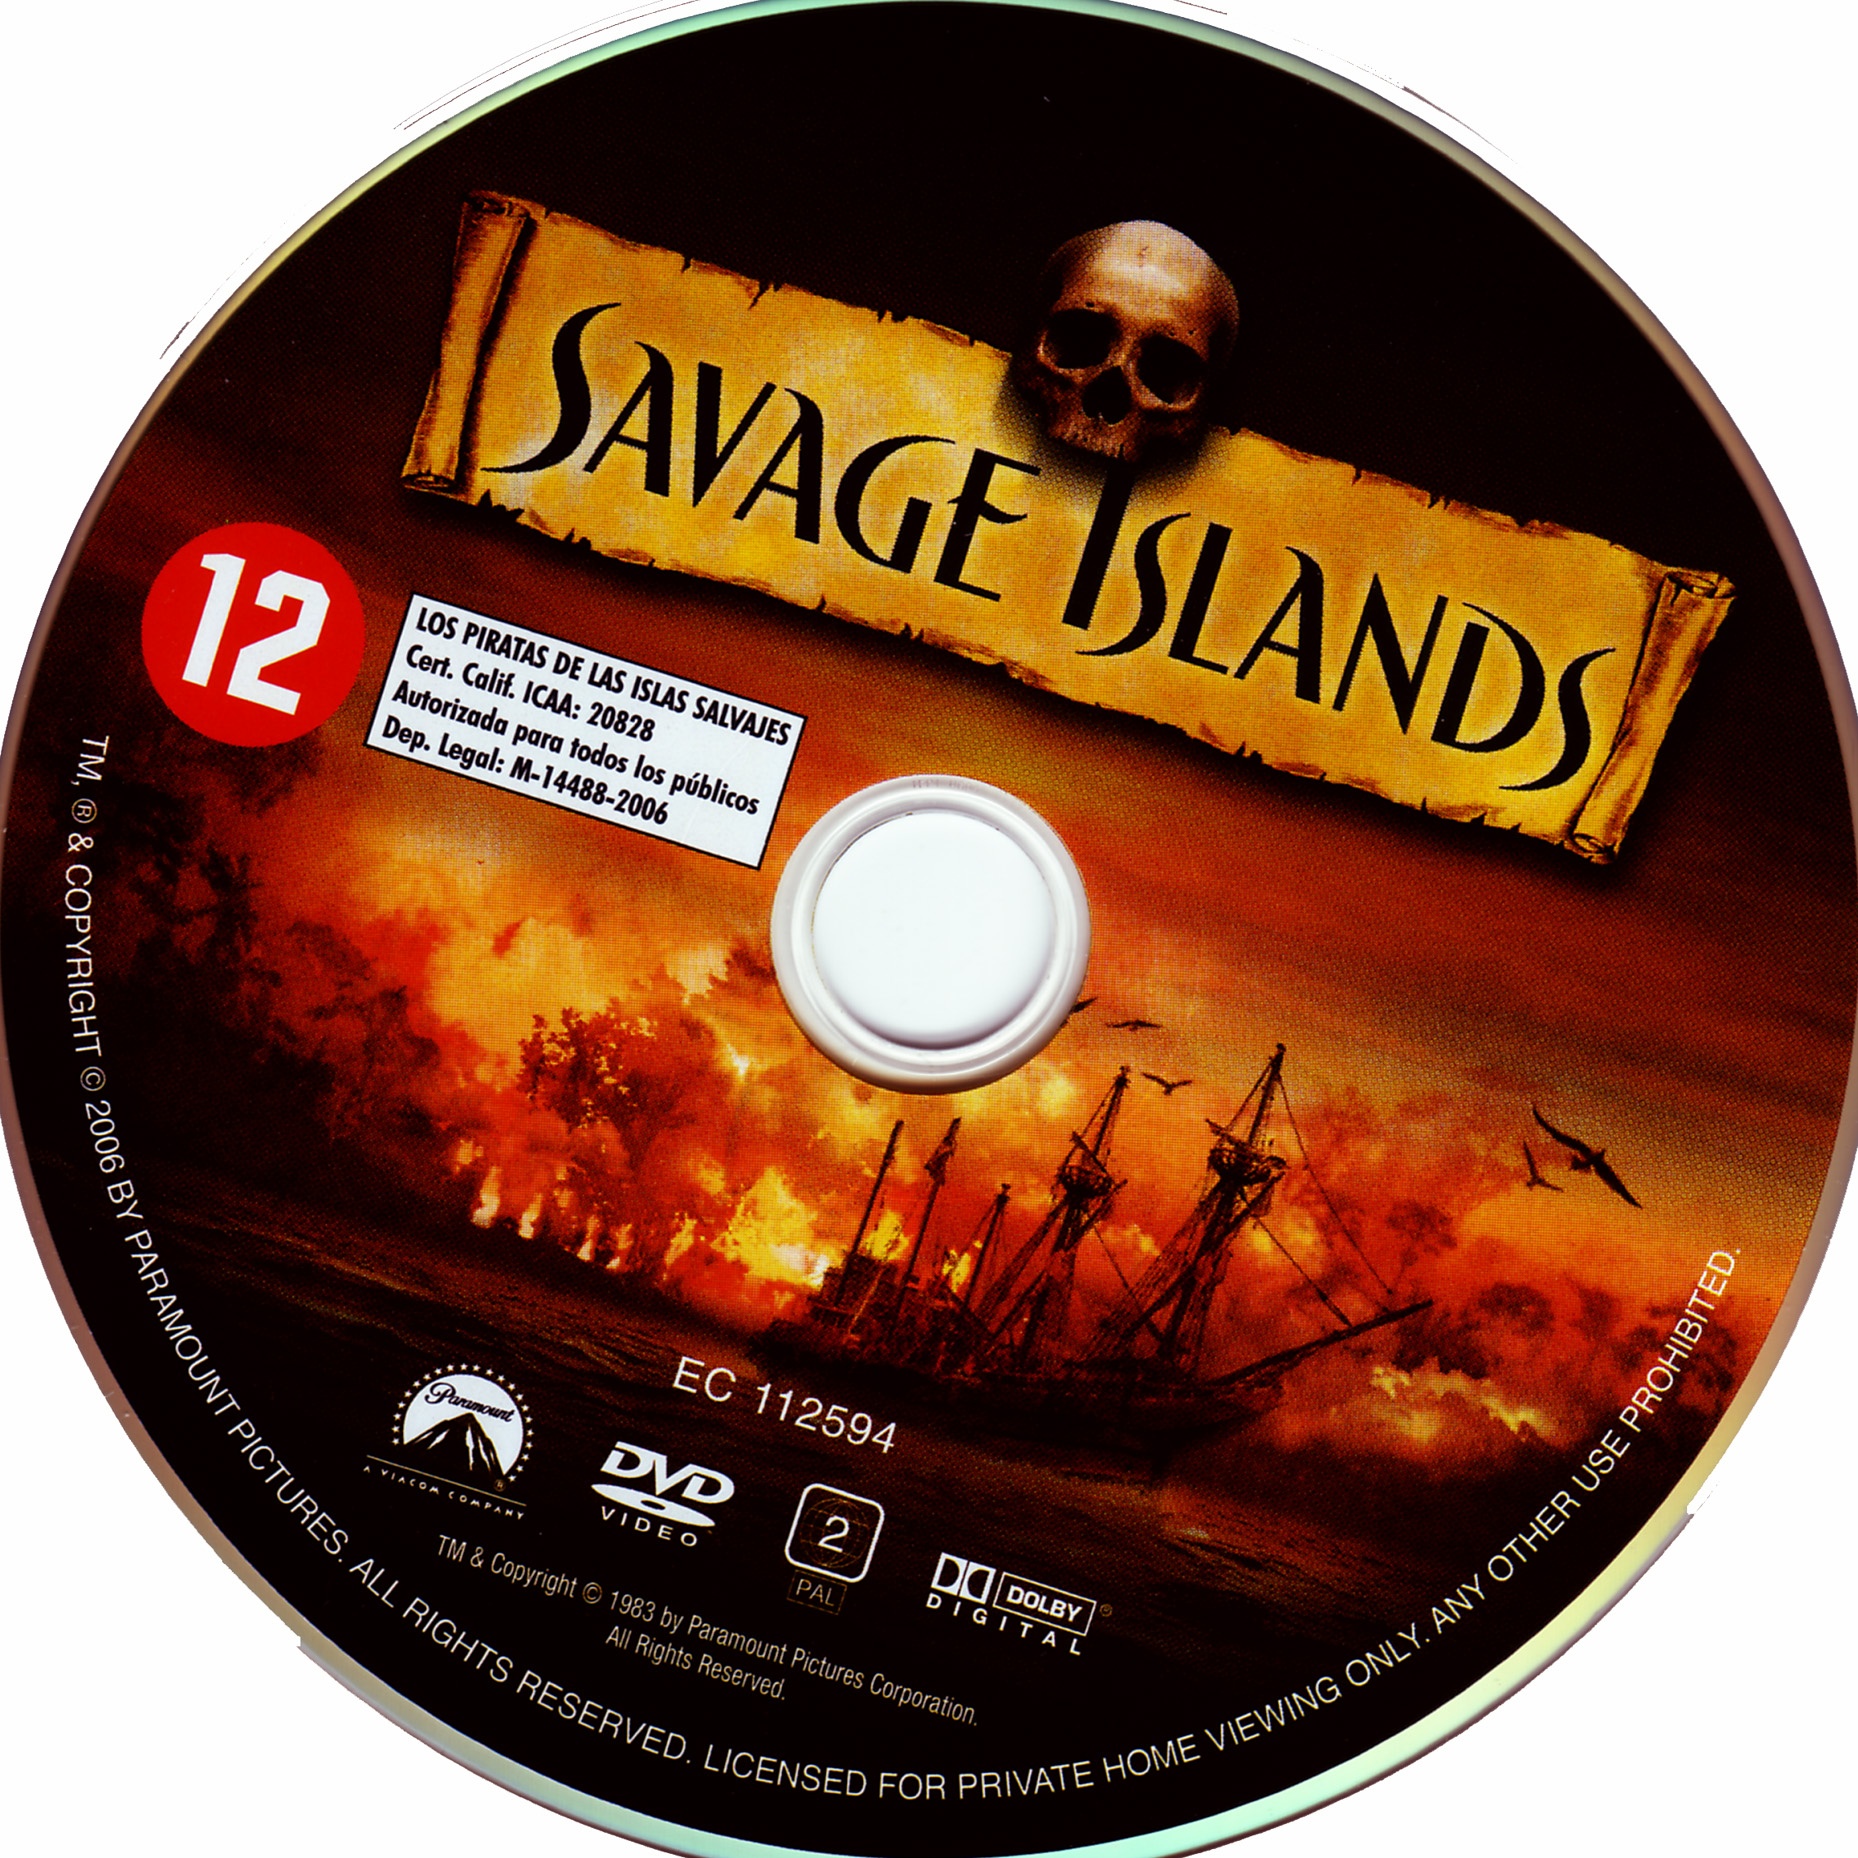 Savage islands